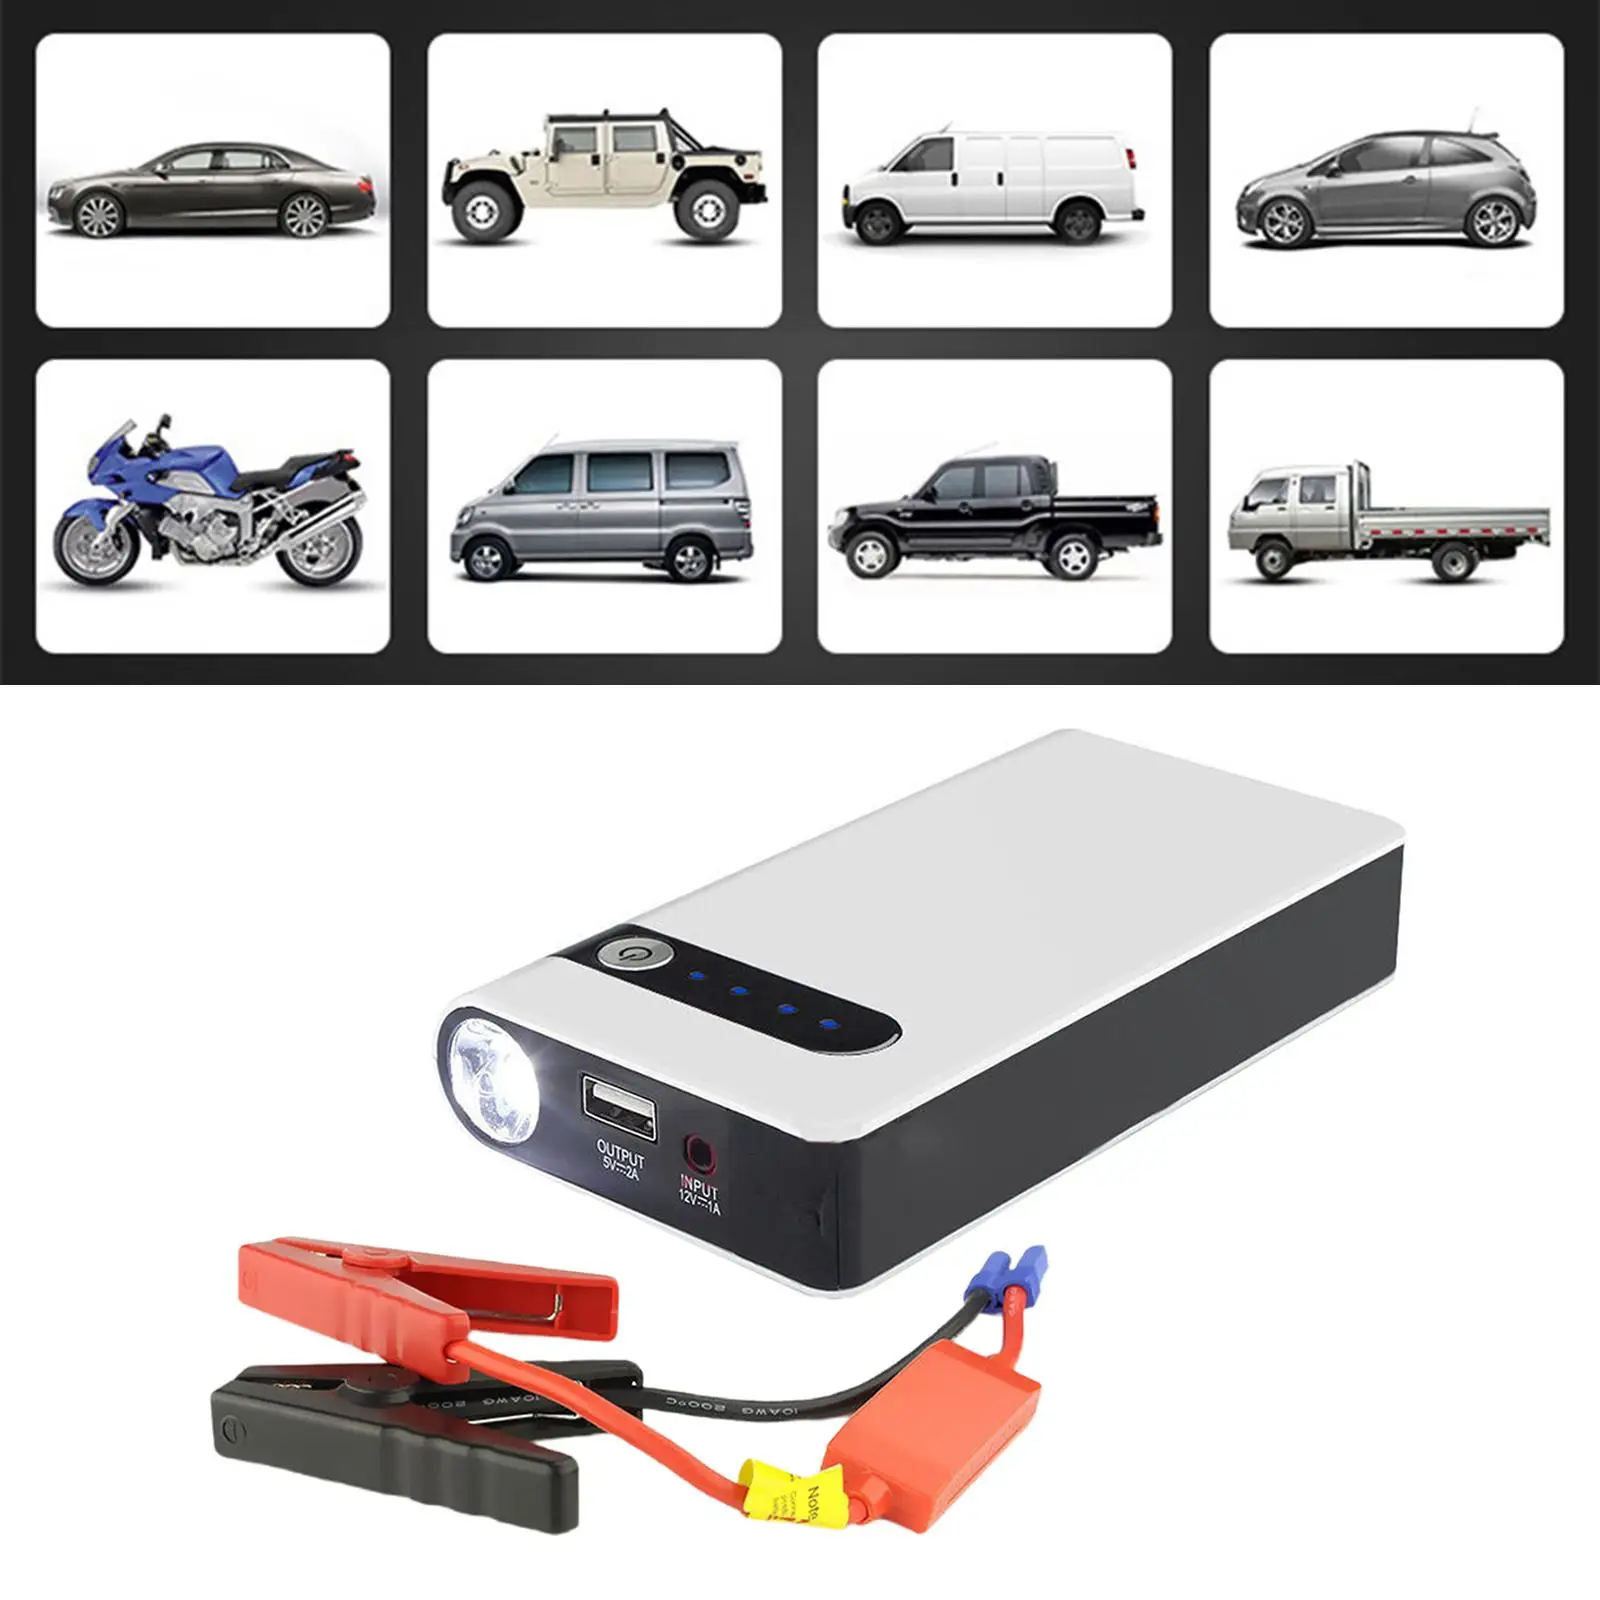 Portable Car Jump Starter LED Display 8000mAh Emergency Start Power Auto Battery Booster Flashlight Laptop Power Bank Charger US